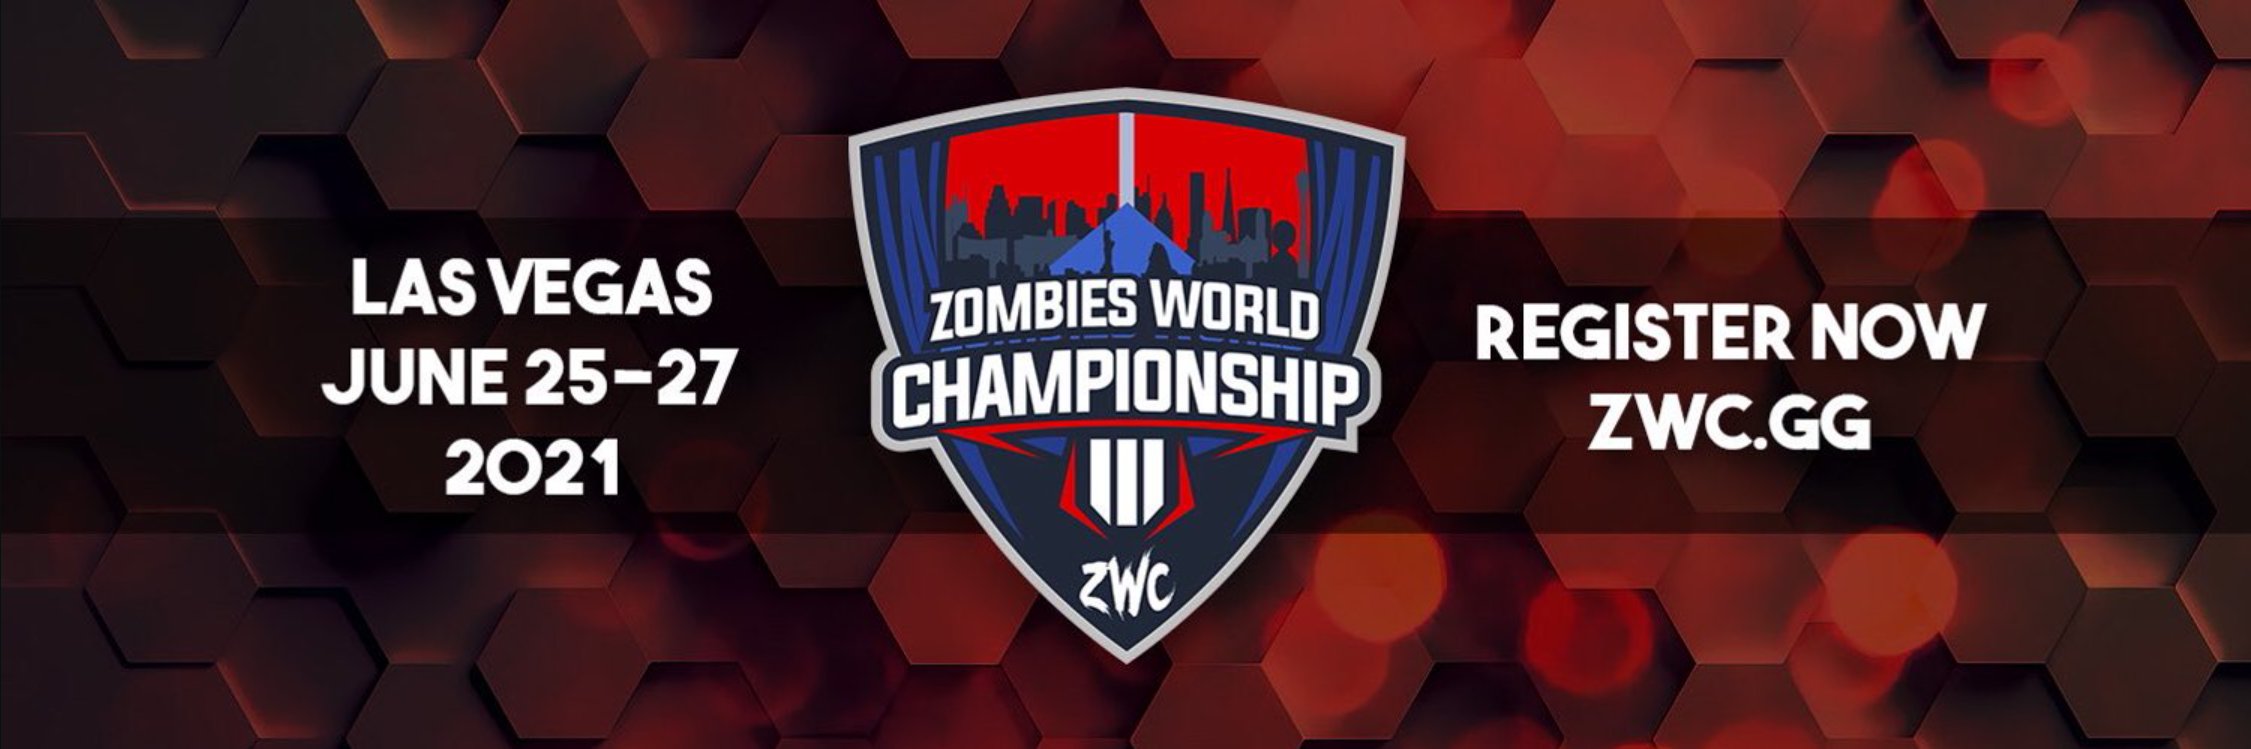 Zombie World Championship